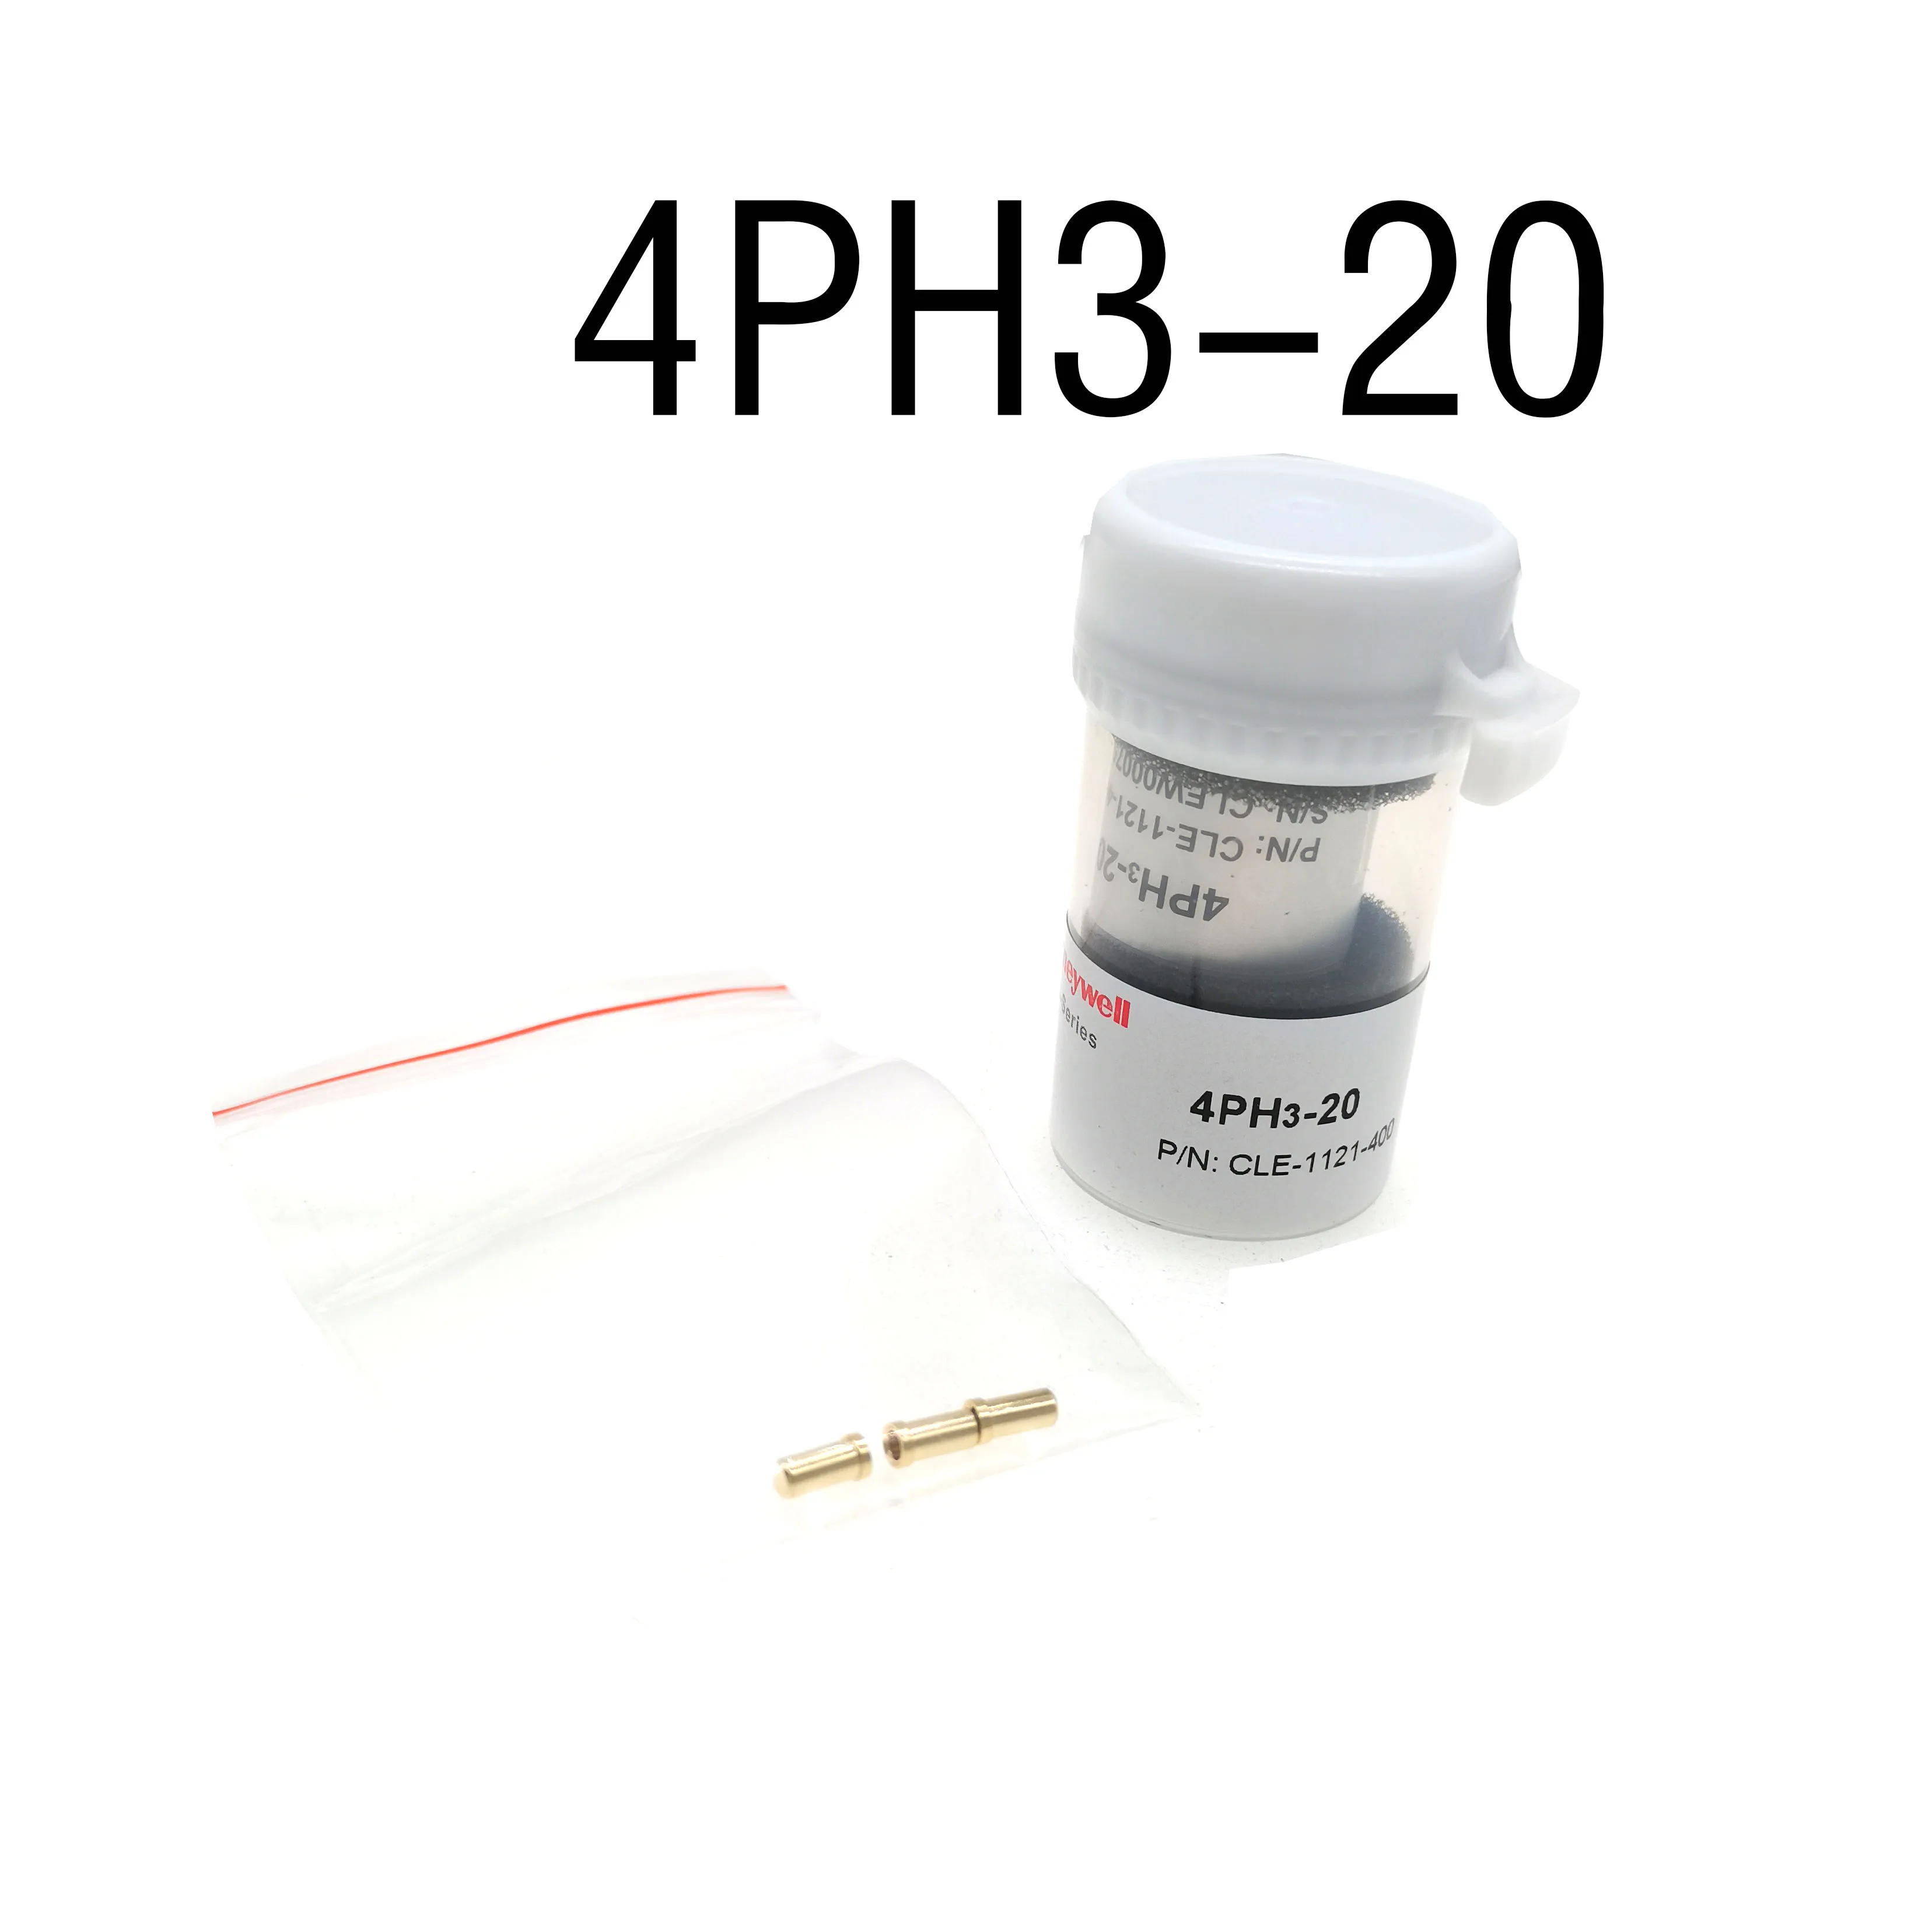 

4PH3-20 CLE-1121-400 Electrochemical Phosphine Sensor